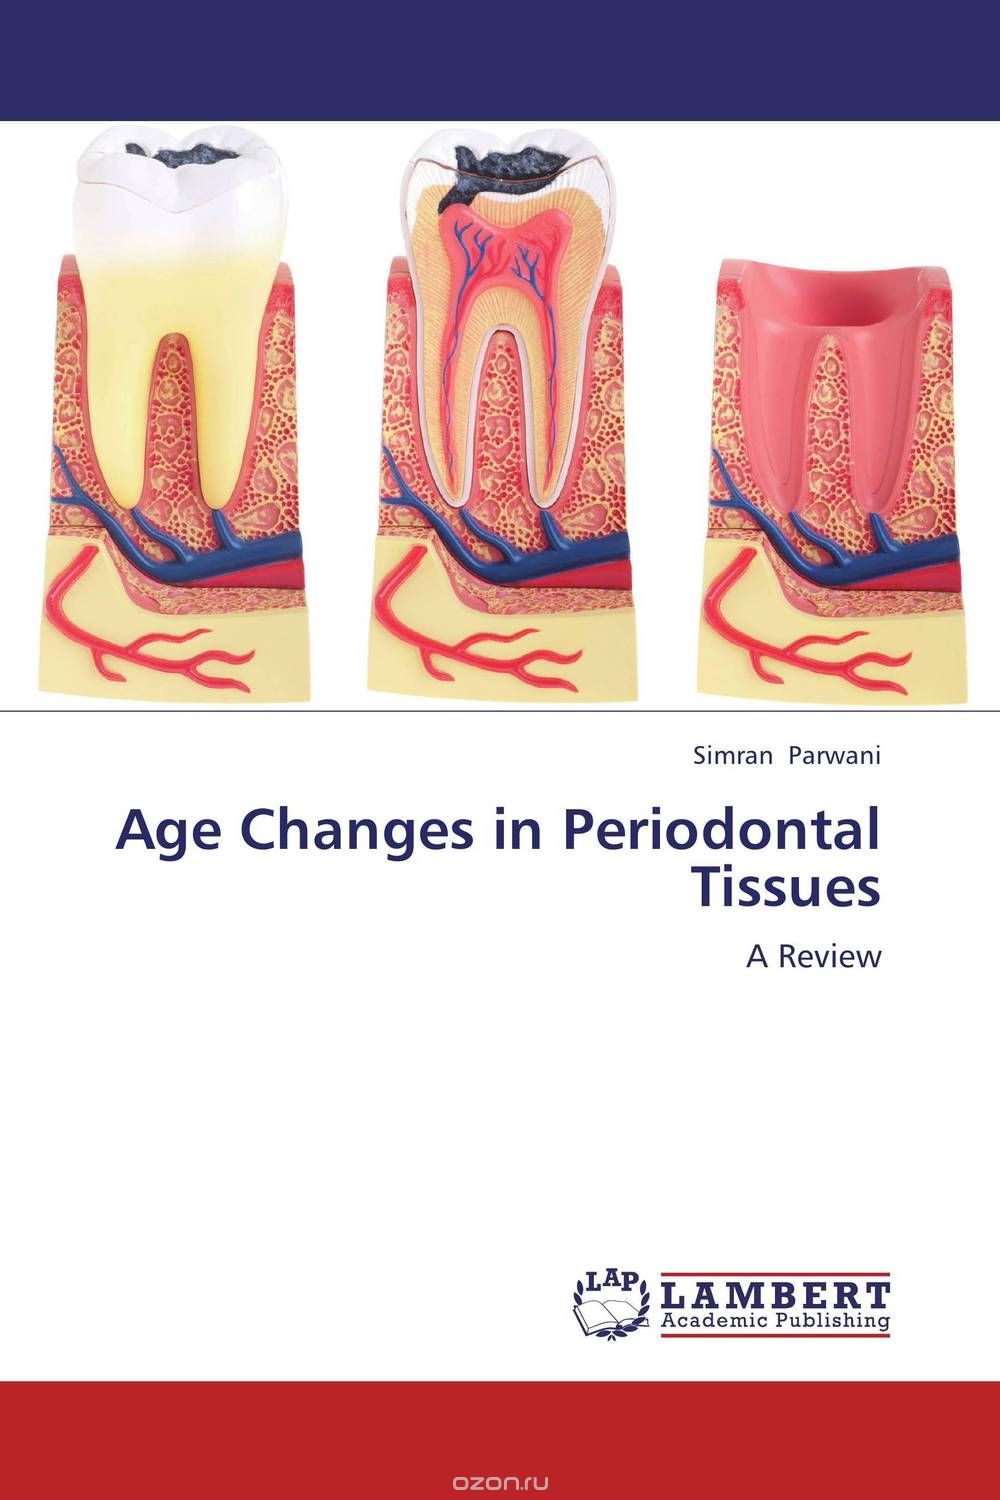 Скачать книгу "Age Changes in Periodontal Tissues"